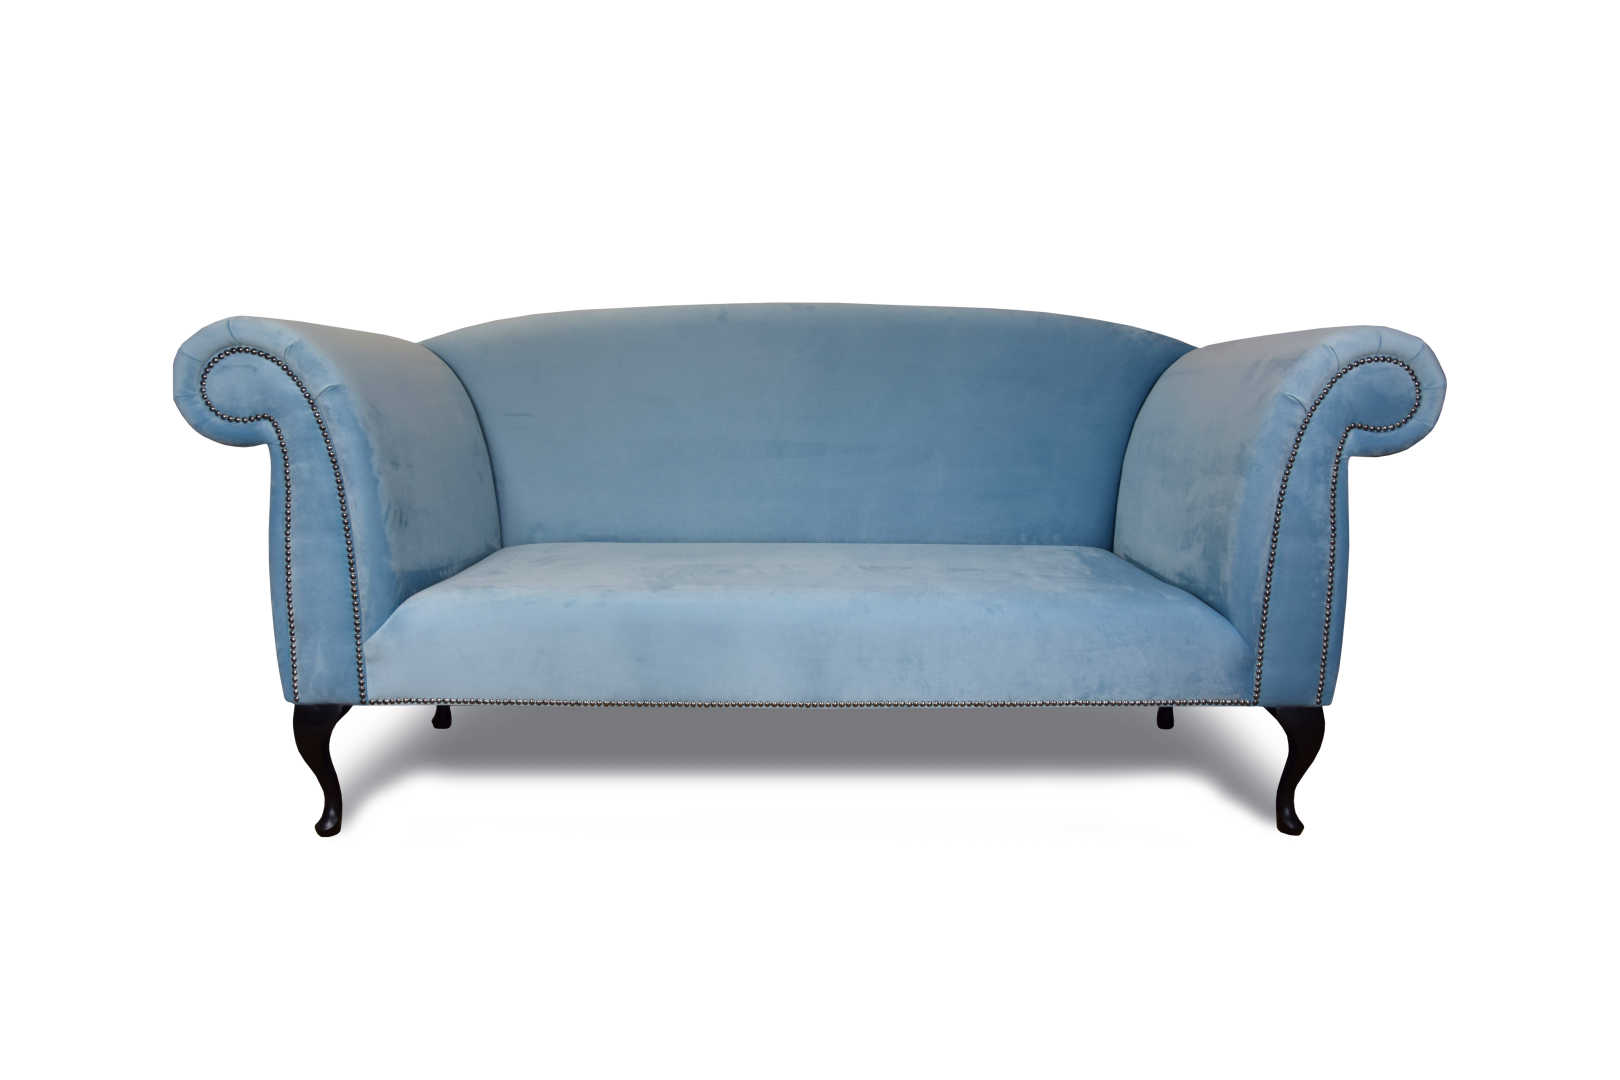 Sofa Chaiselongue Glattes Blau Mit Dekorativen Nageln